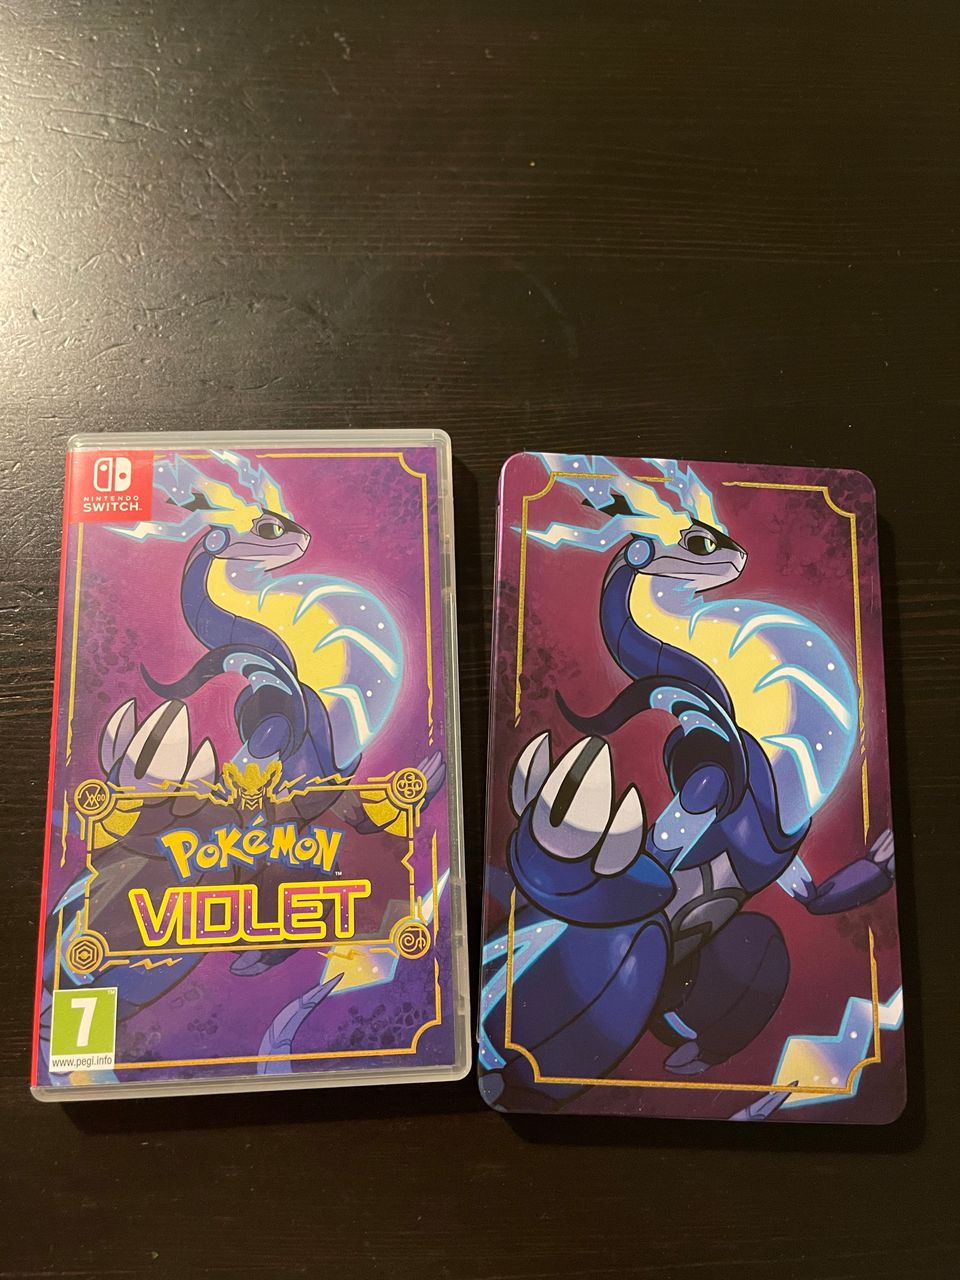 Pokemon Violet with Steelbook